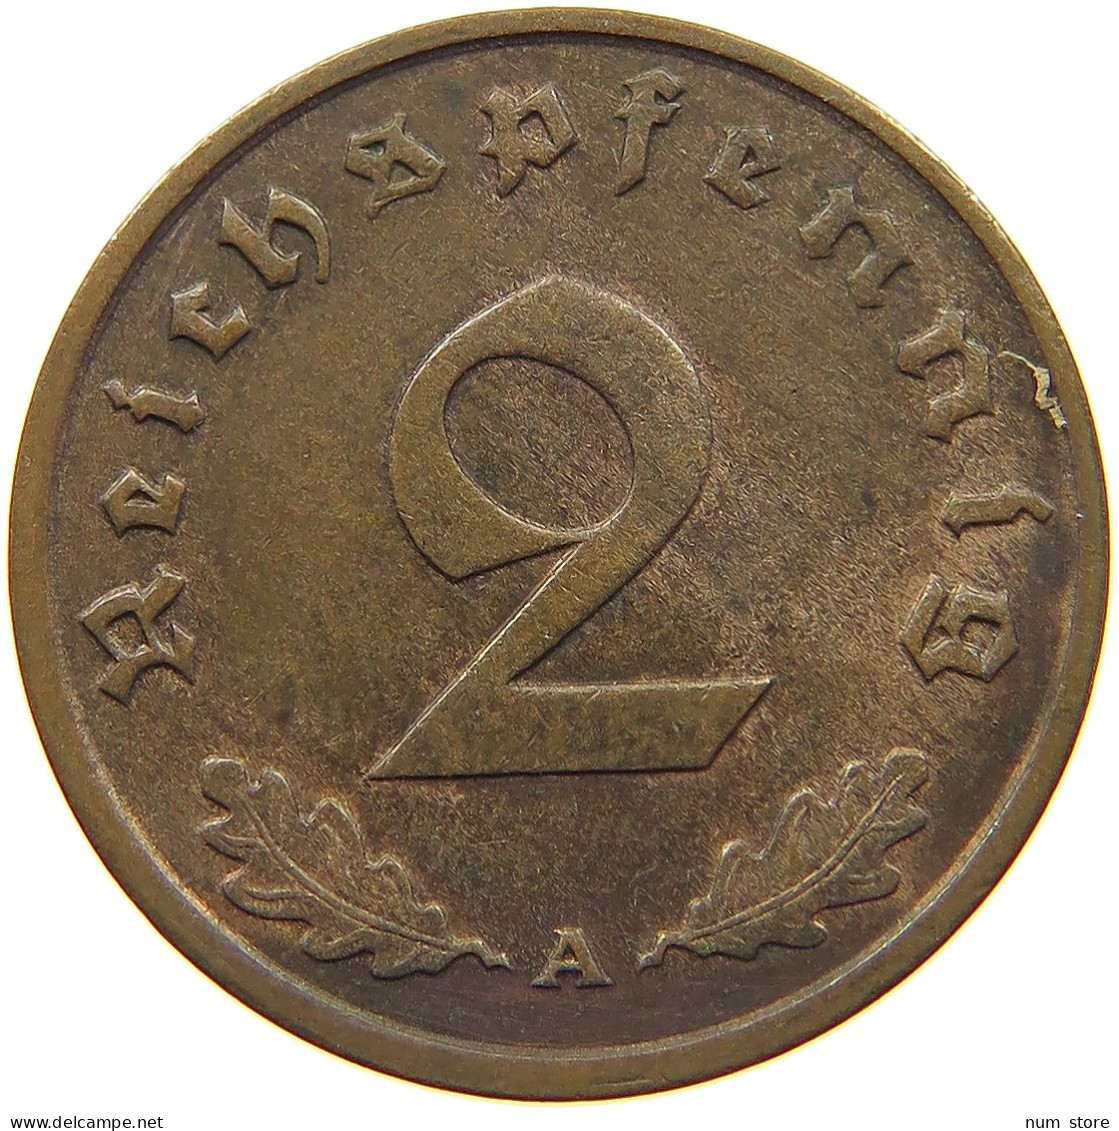 GERMANY 2 PFENNIG 1938 A #c083 0155 - 2 Reichspfennig